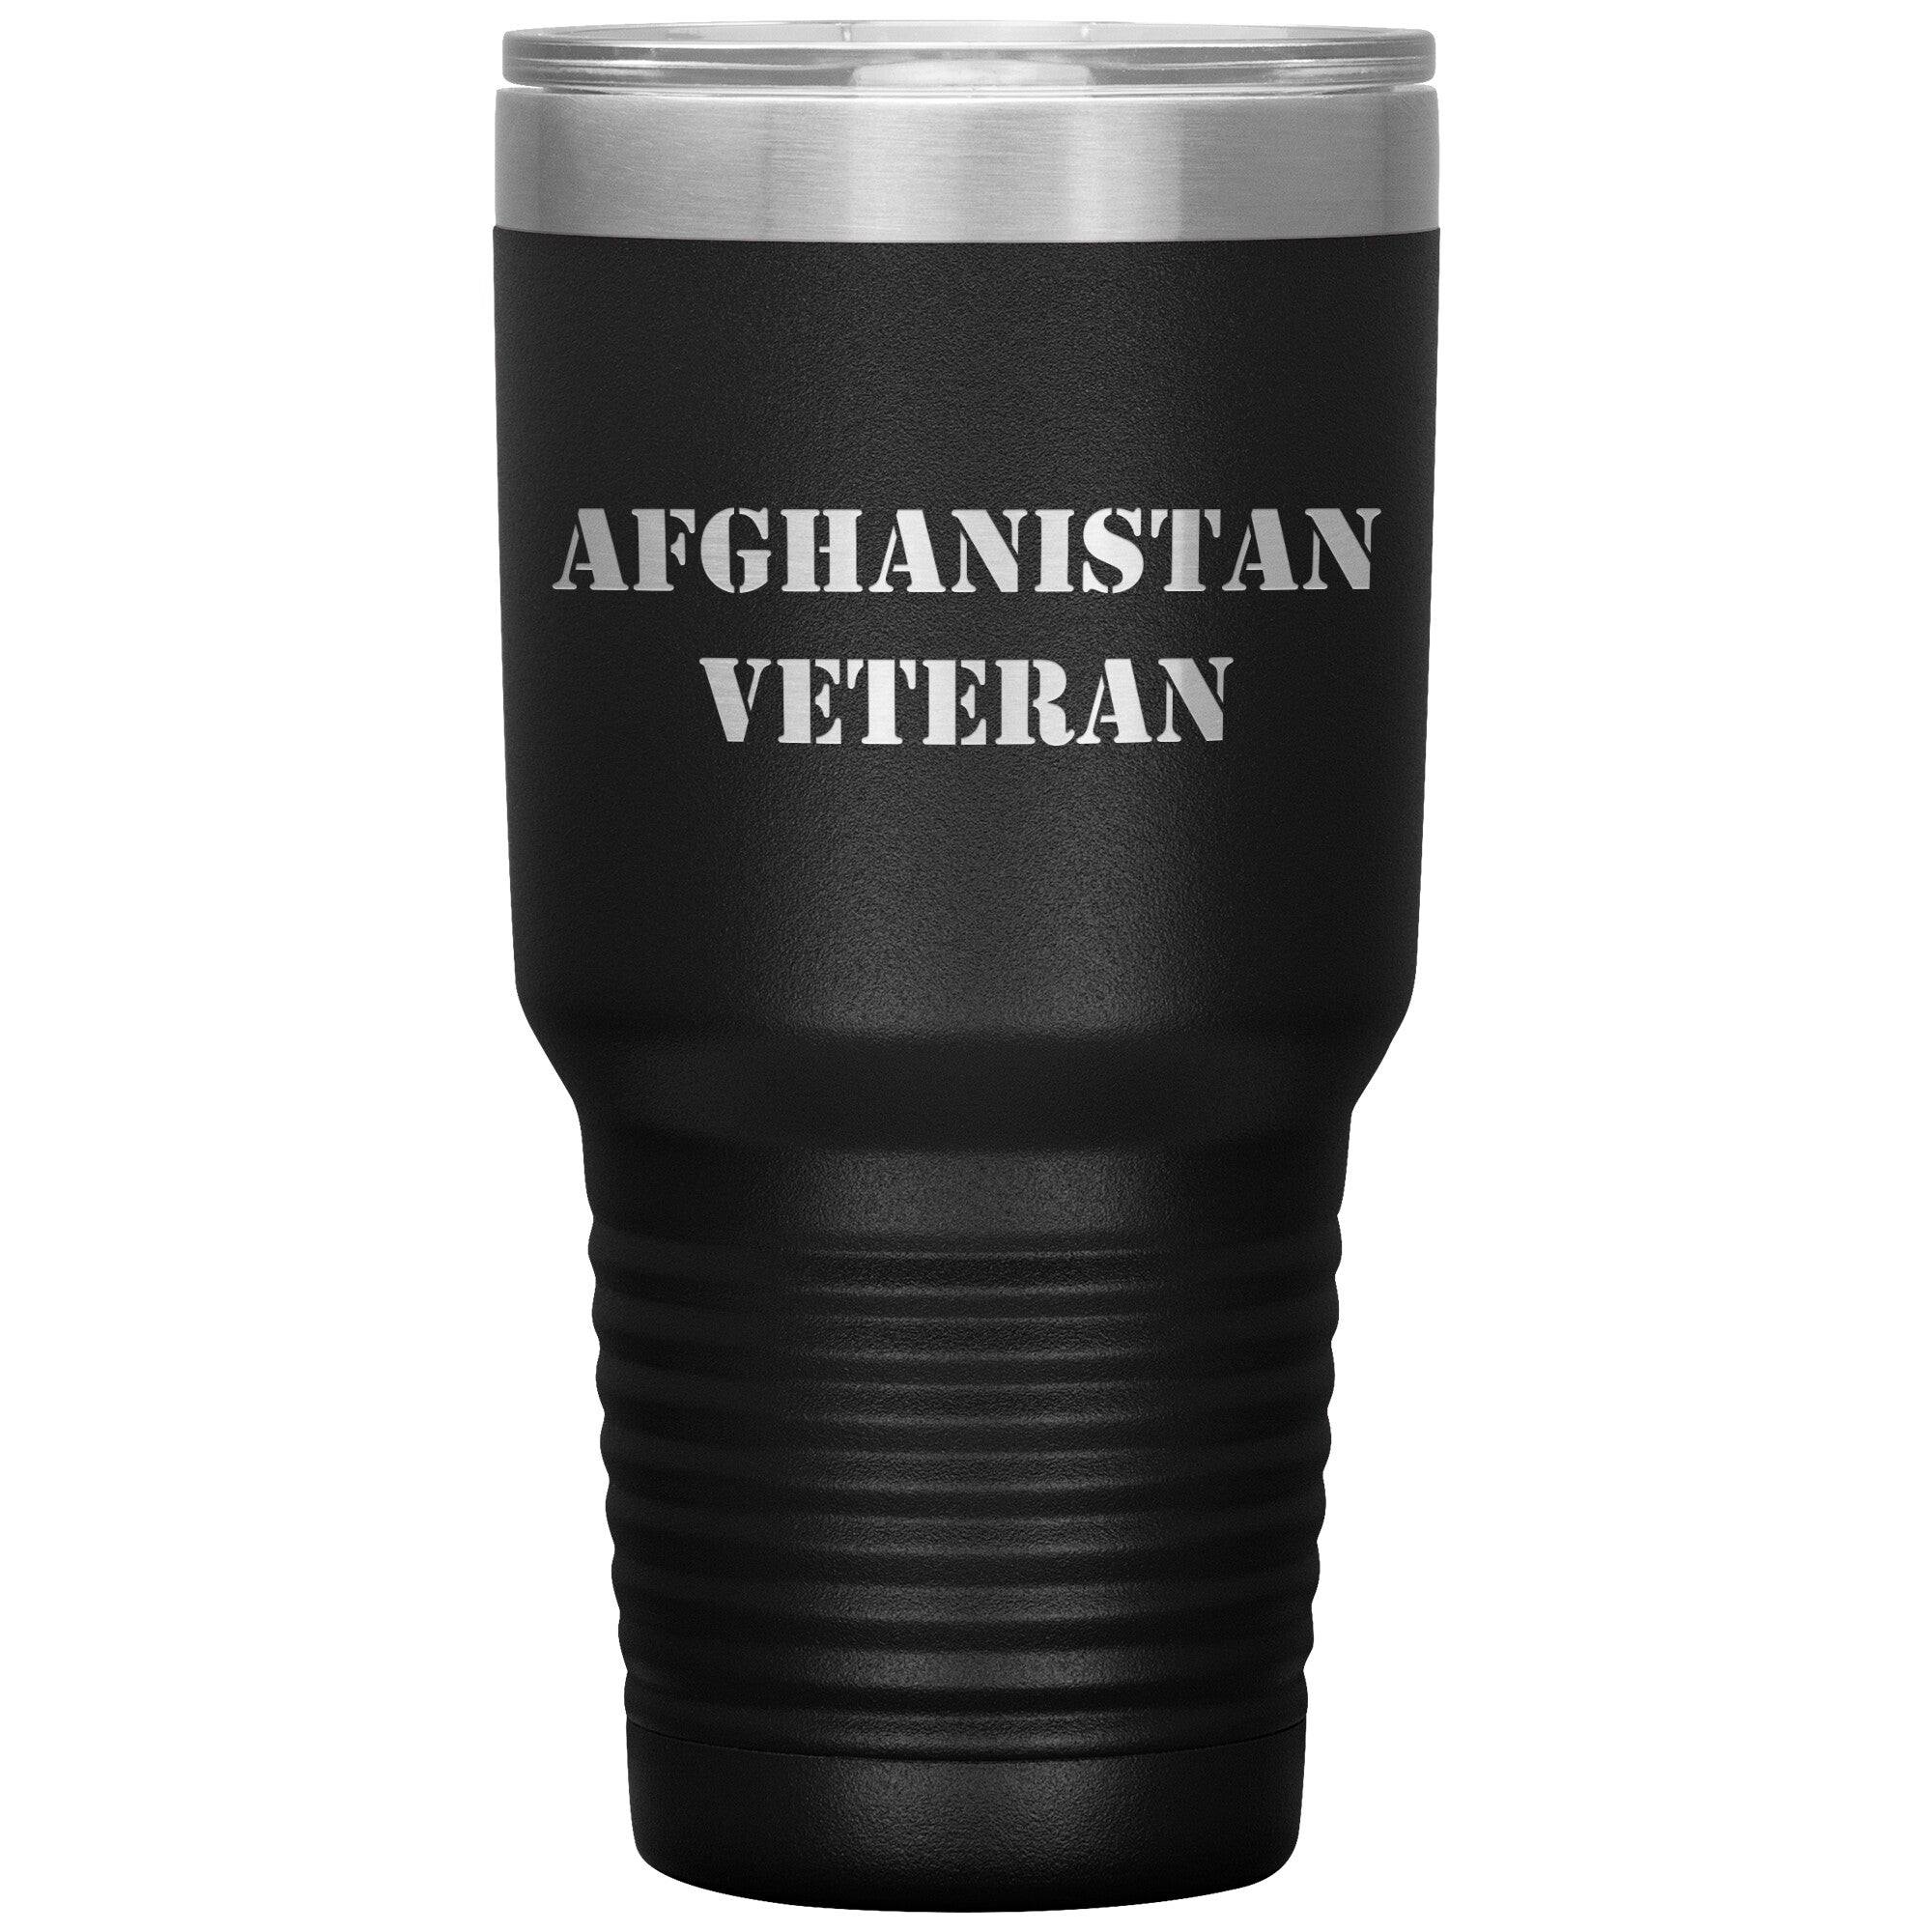 Afghanistan Veteran - 30oz Insulated Tumbler